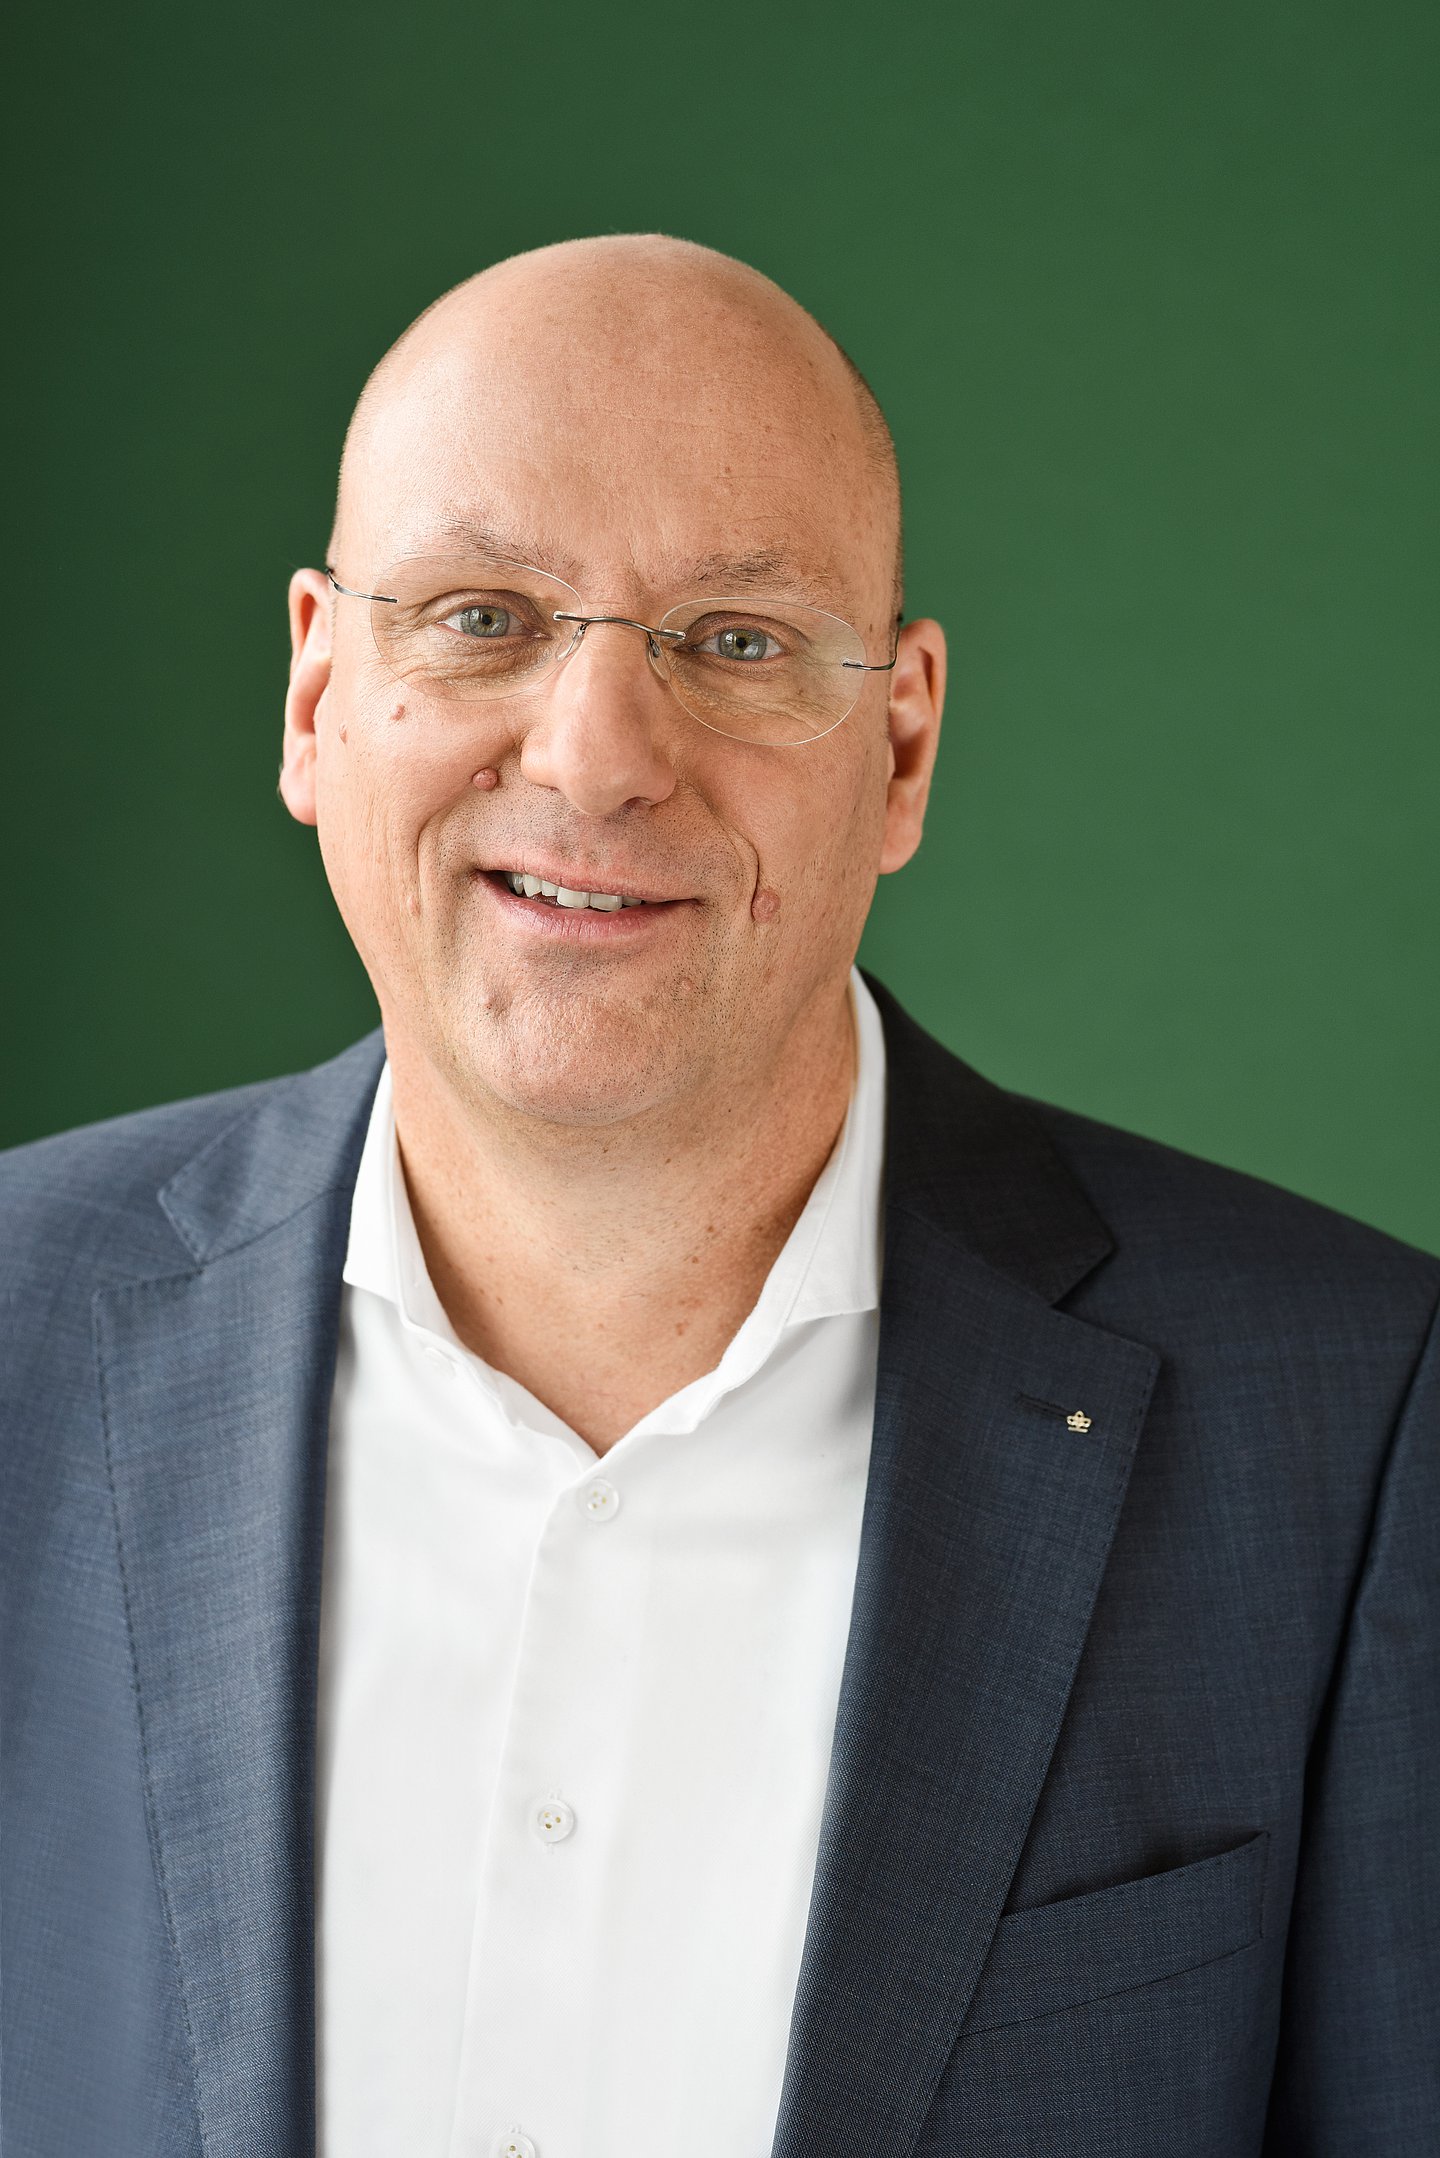 Porträt: Jens Hoyer, stellvertretender Vorstandsvorsitzender des AOK-Bundesverbandes